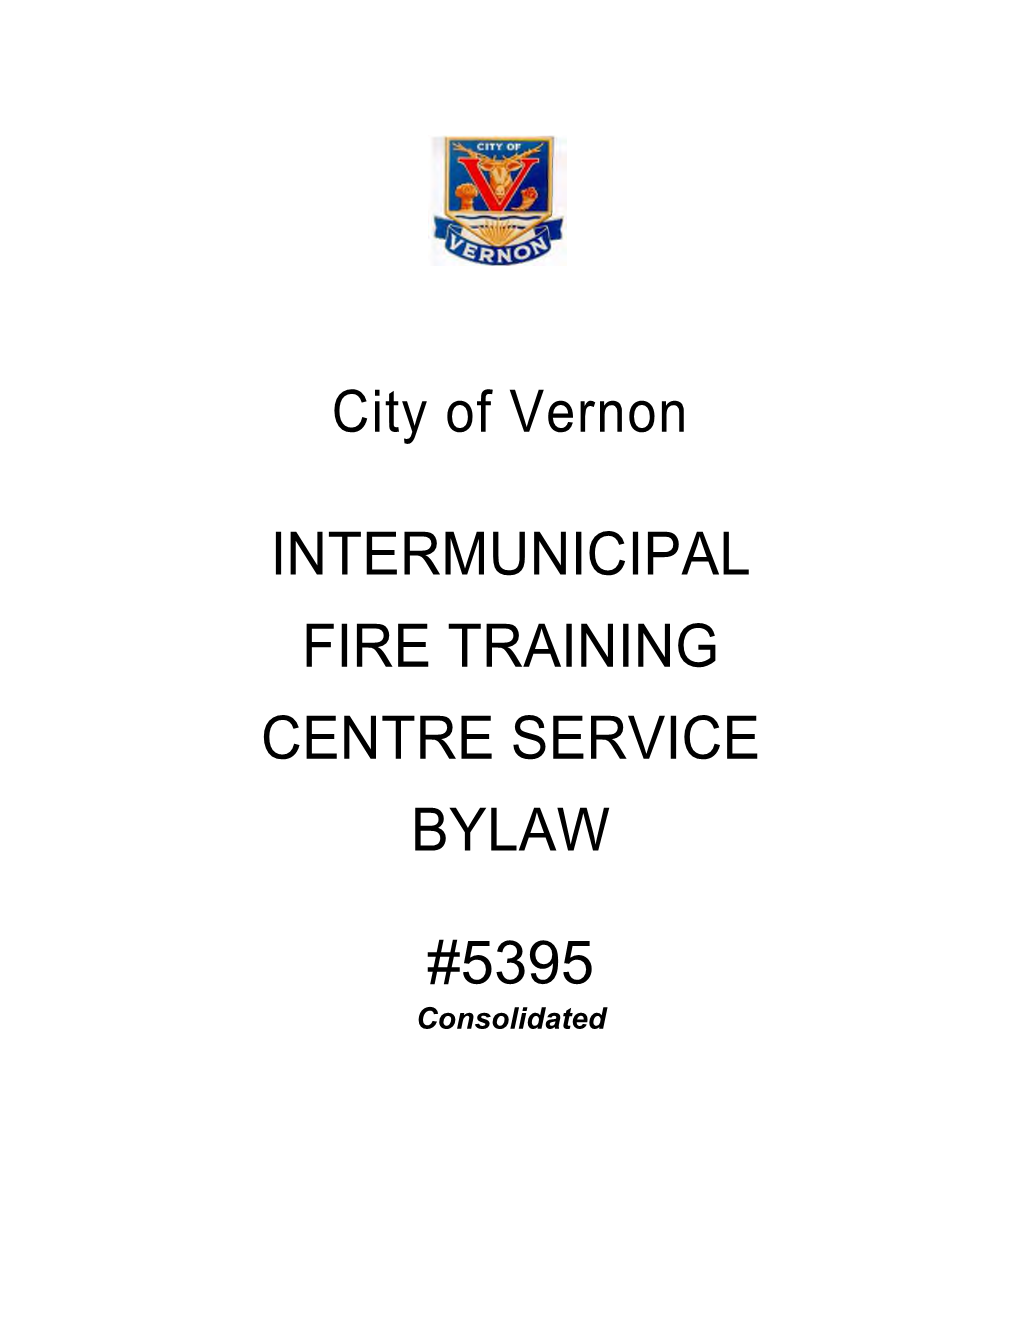 Intermunicipal Fire Training Centre Service Bylaw 5395